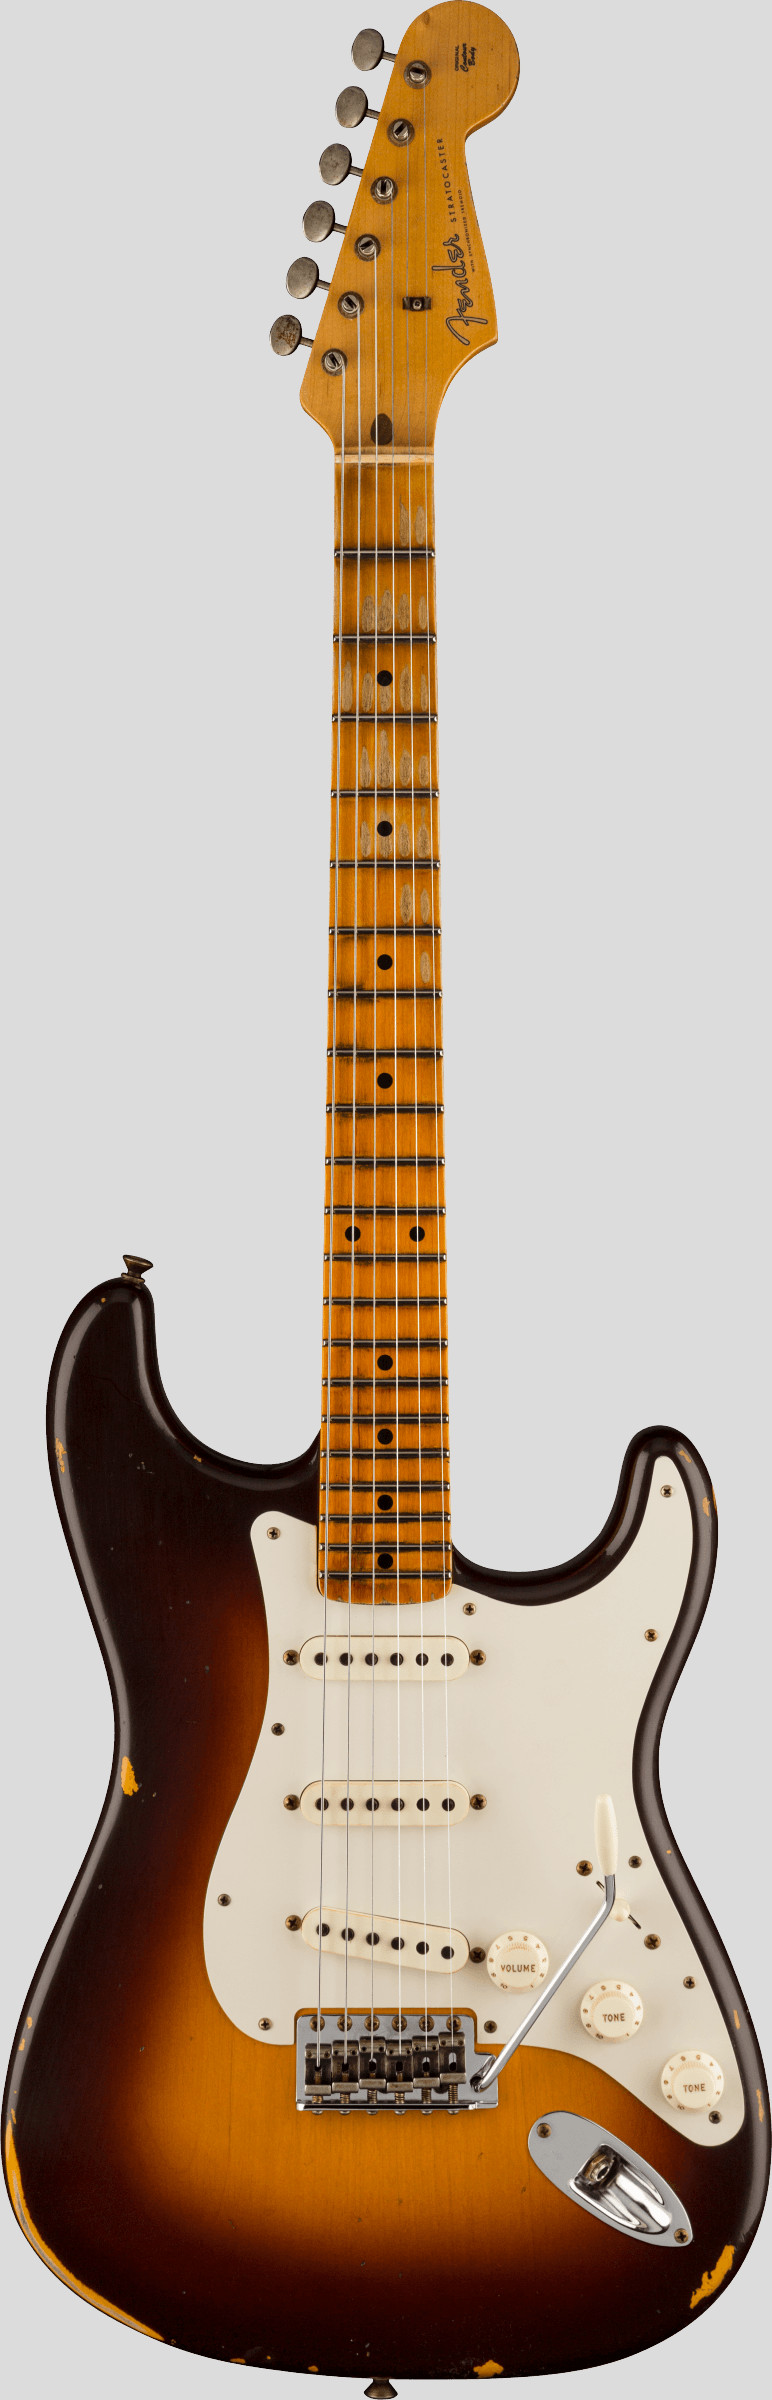 Fender Custom Shop Limited Edition Fat 50 Stratocaster Wide Fade Chocolate 2-Color Sunburst Relic 1